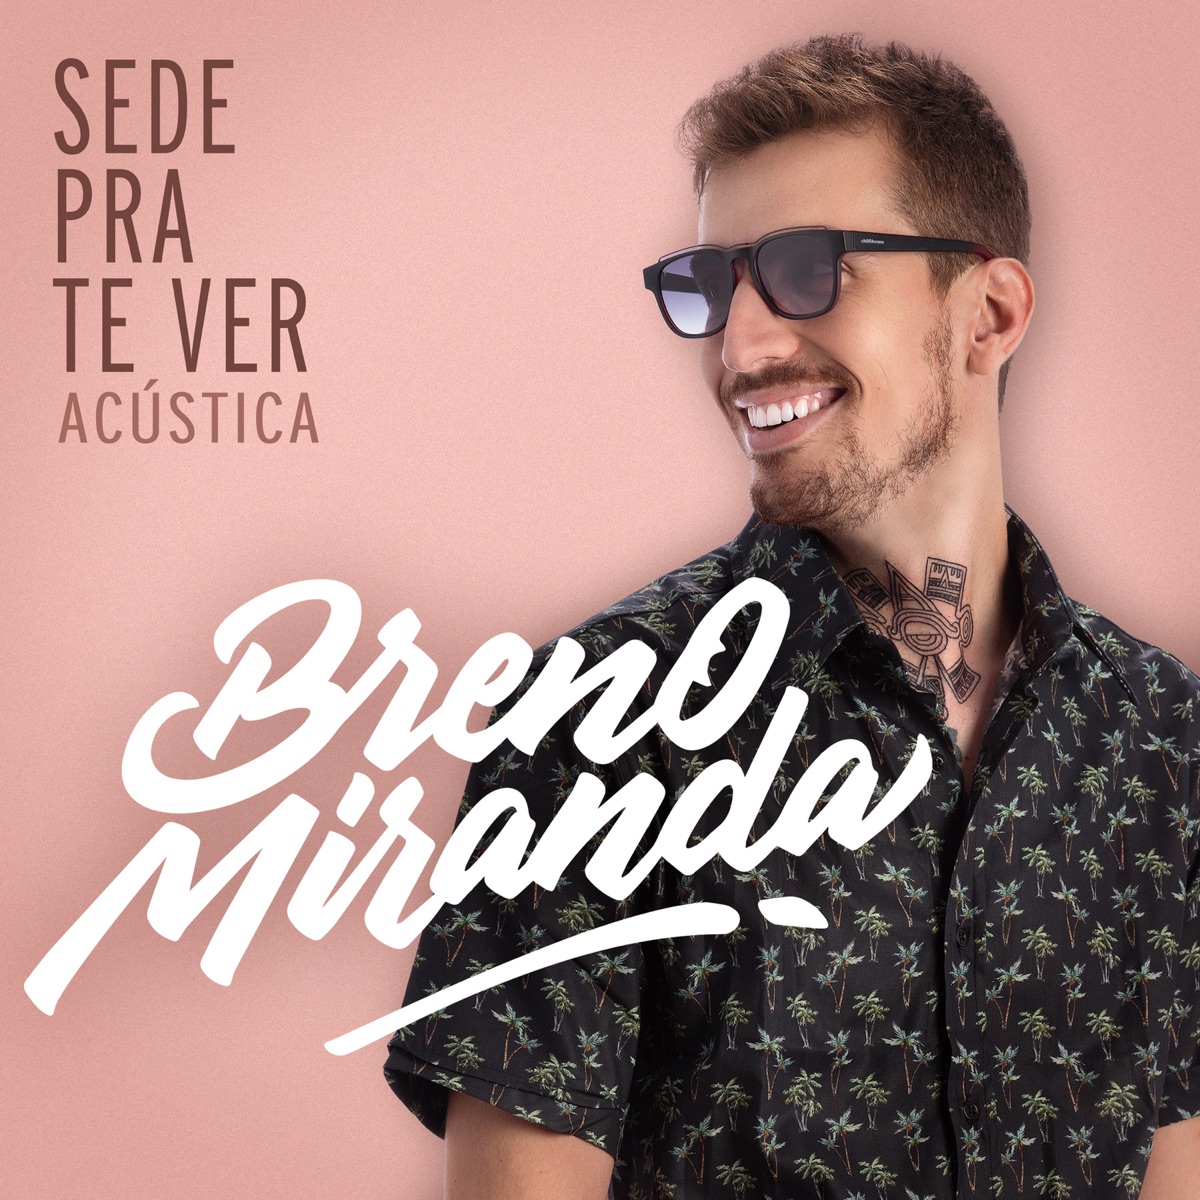 ‎Another Day in Paradise - Música de Breno Miranda - Apple Music